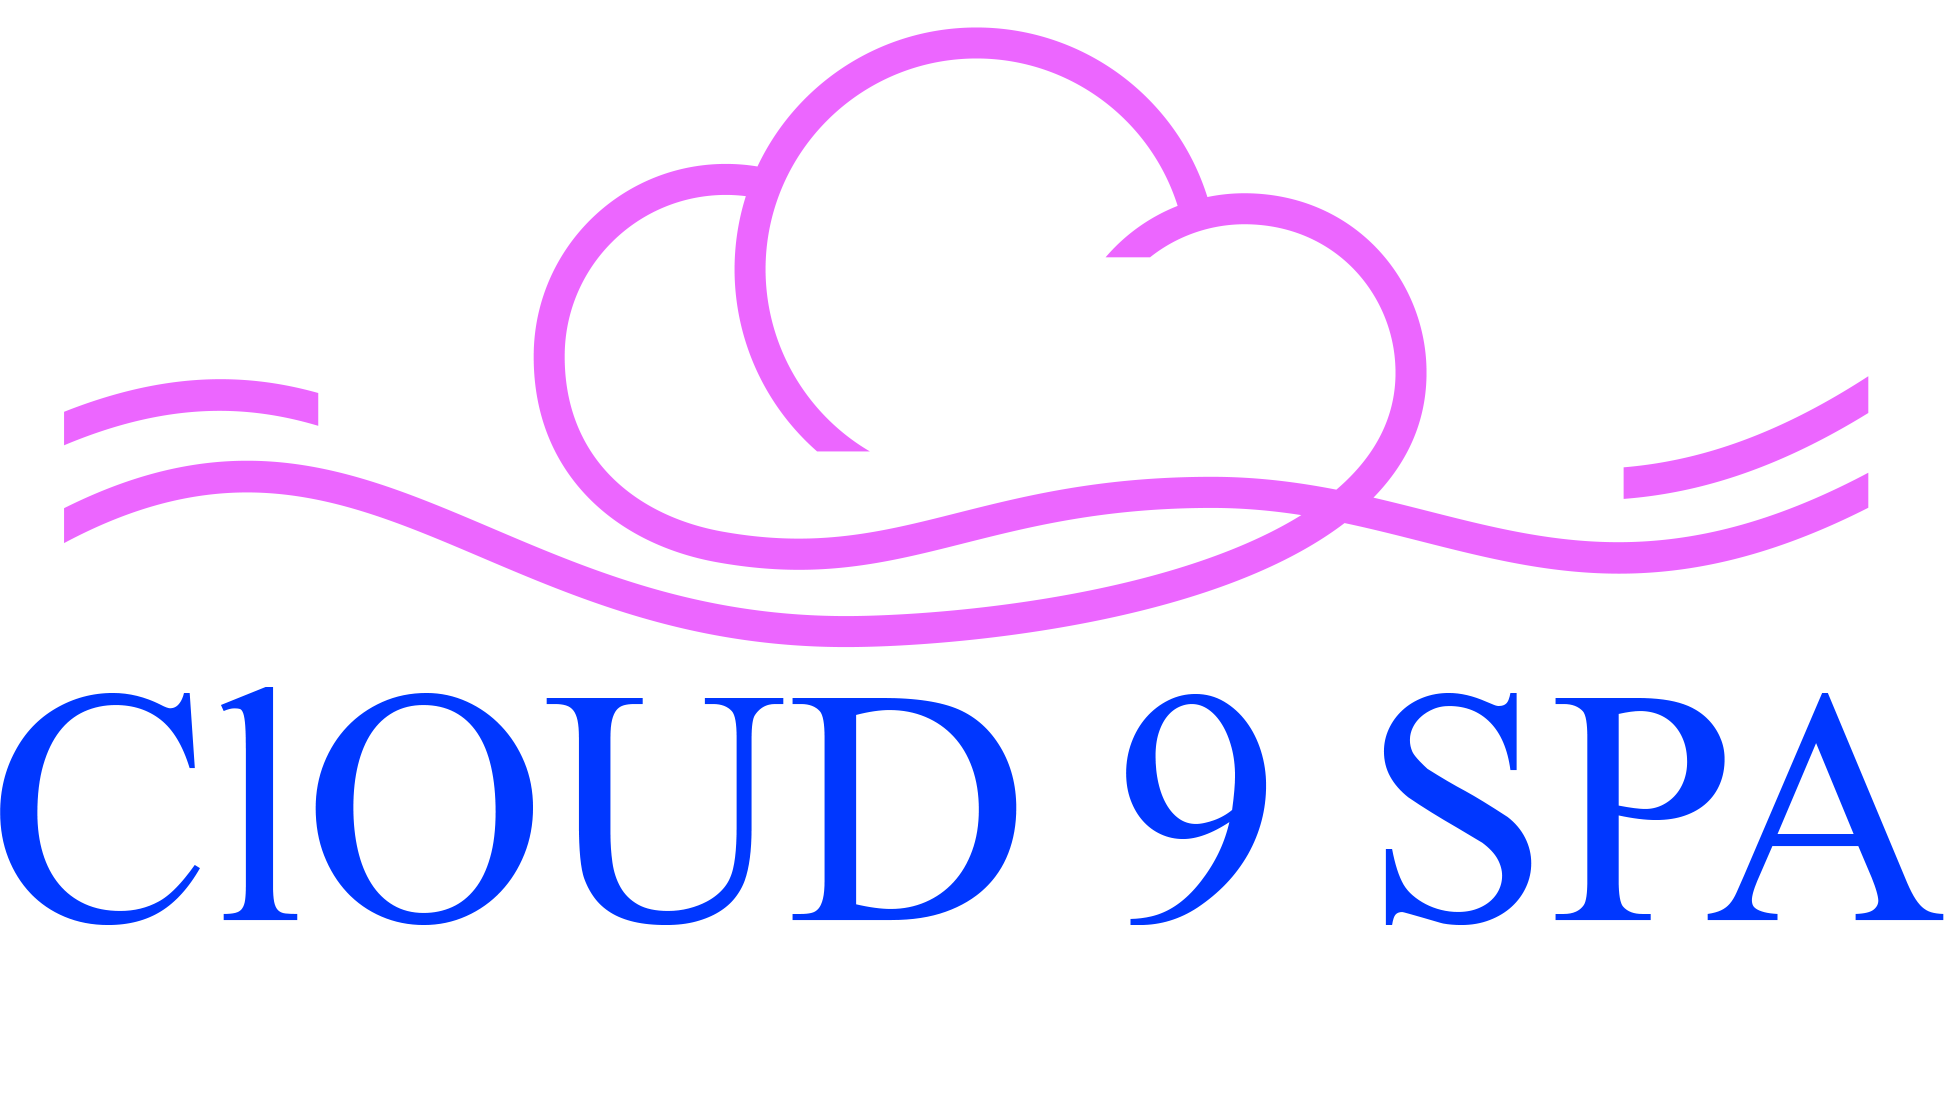 Cloud 9 Spa